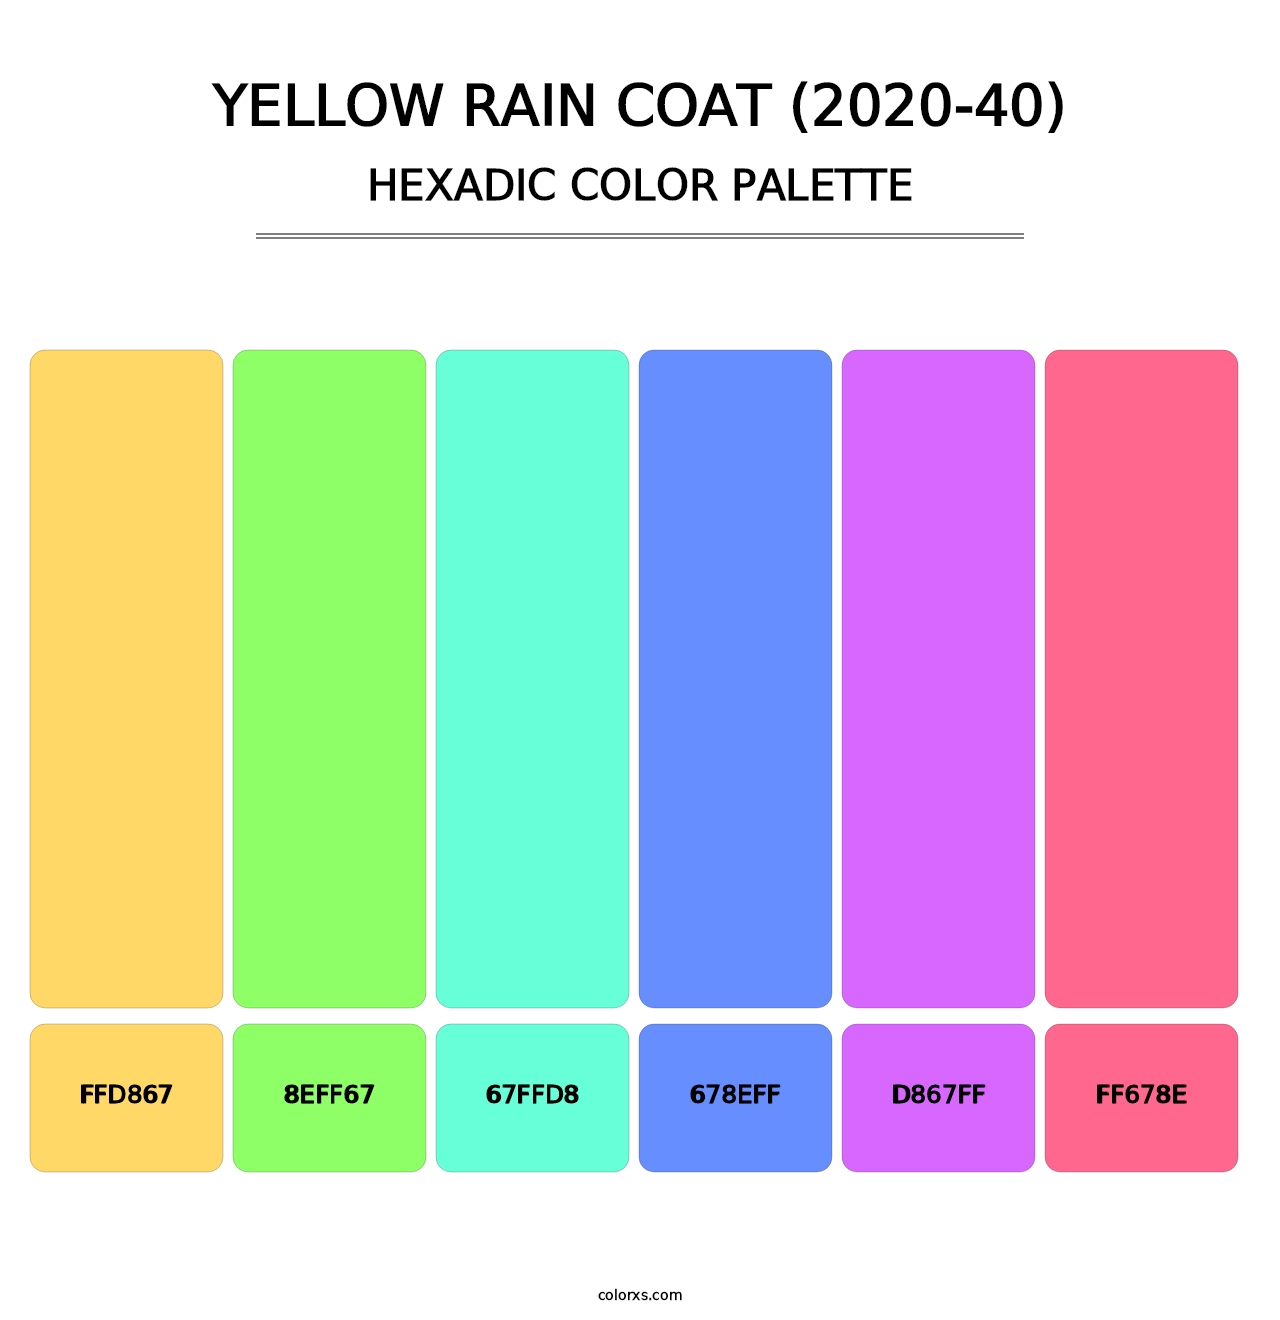 Yellow Rain Coat (2020-40) - Hexadic Color Palette